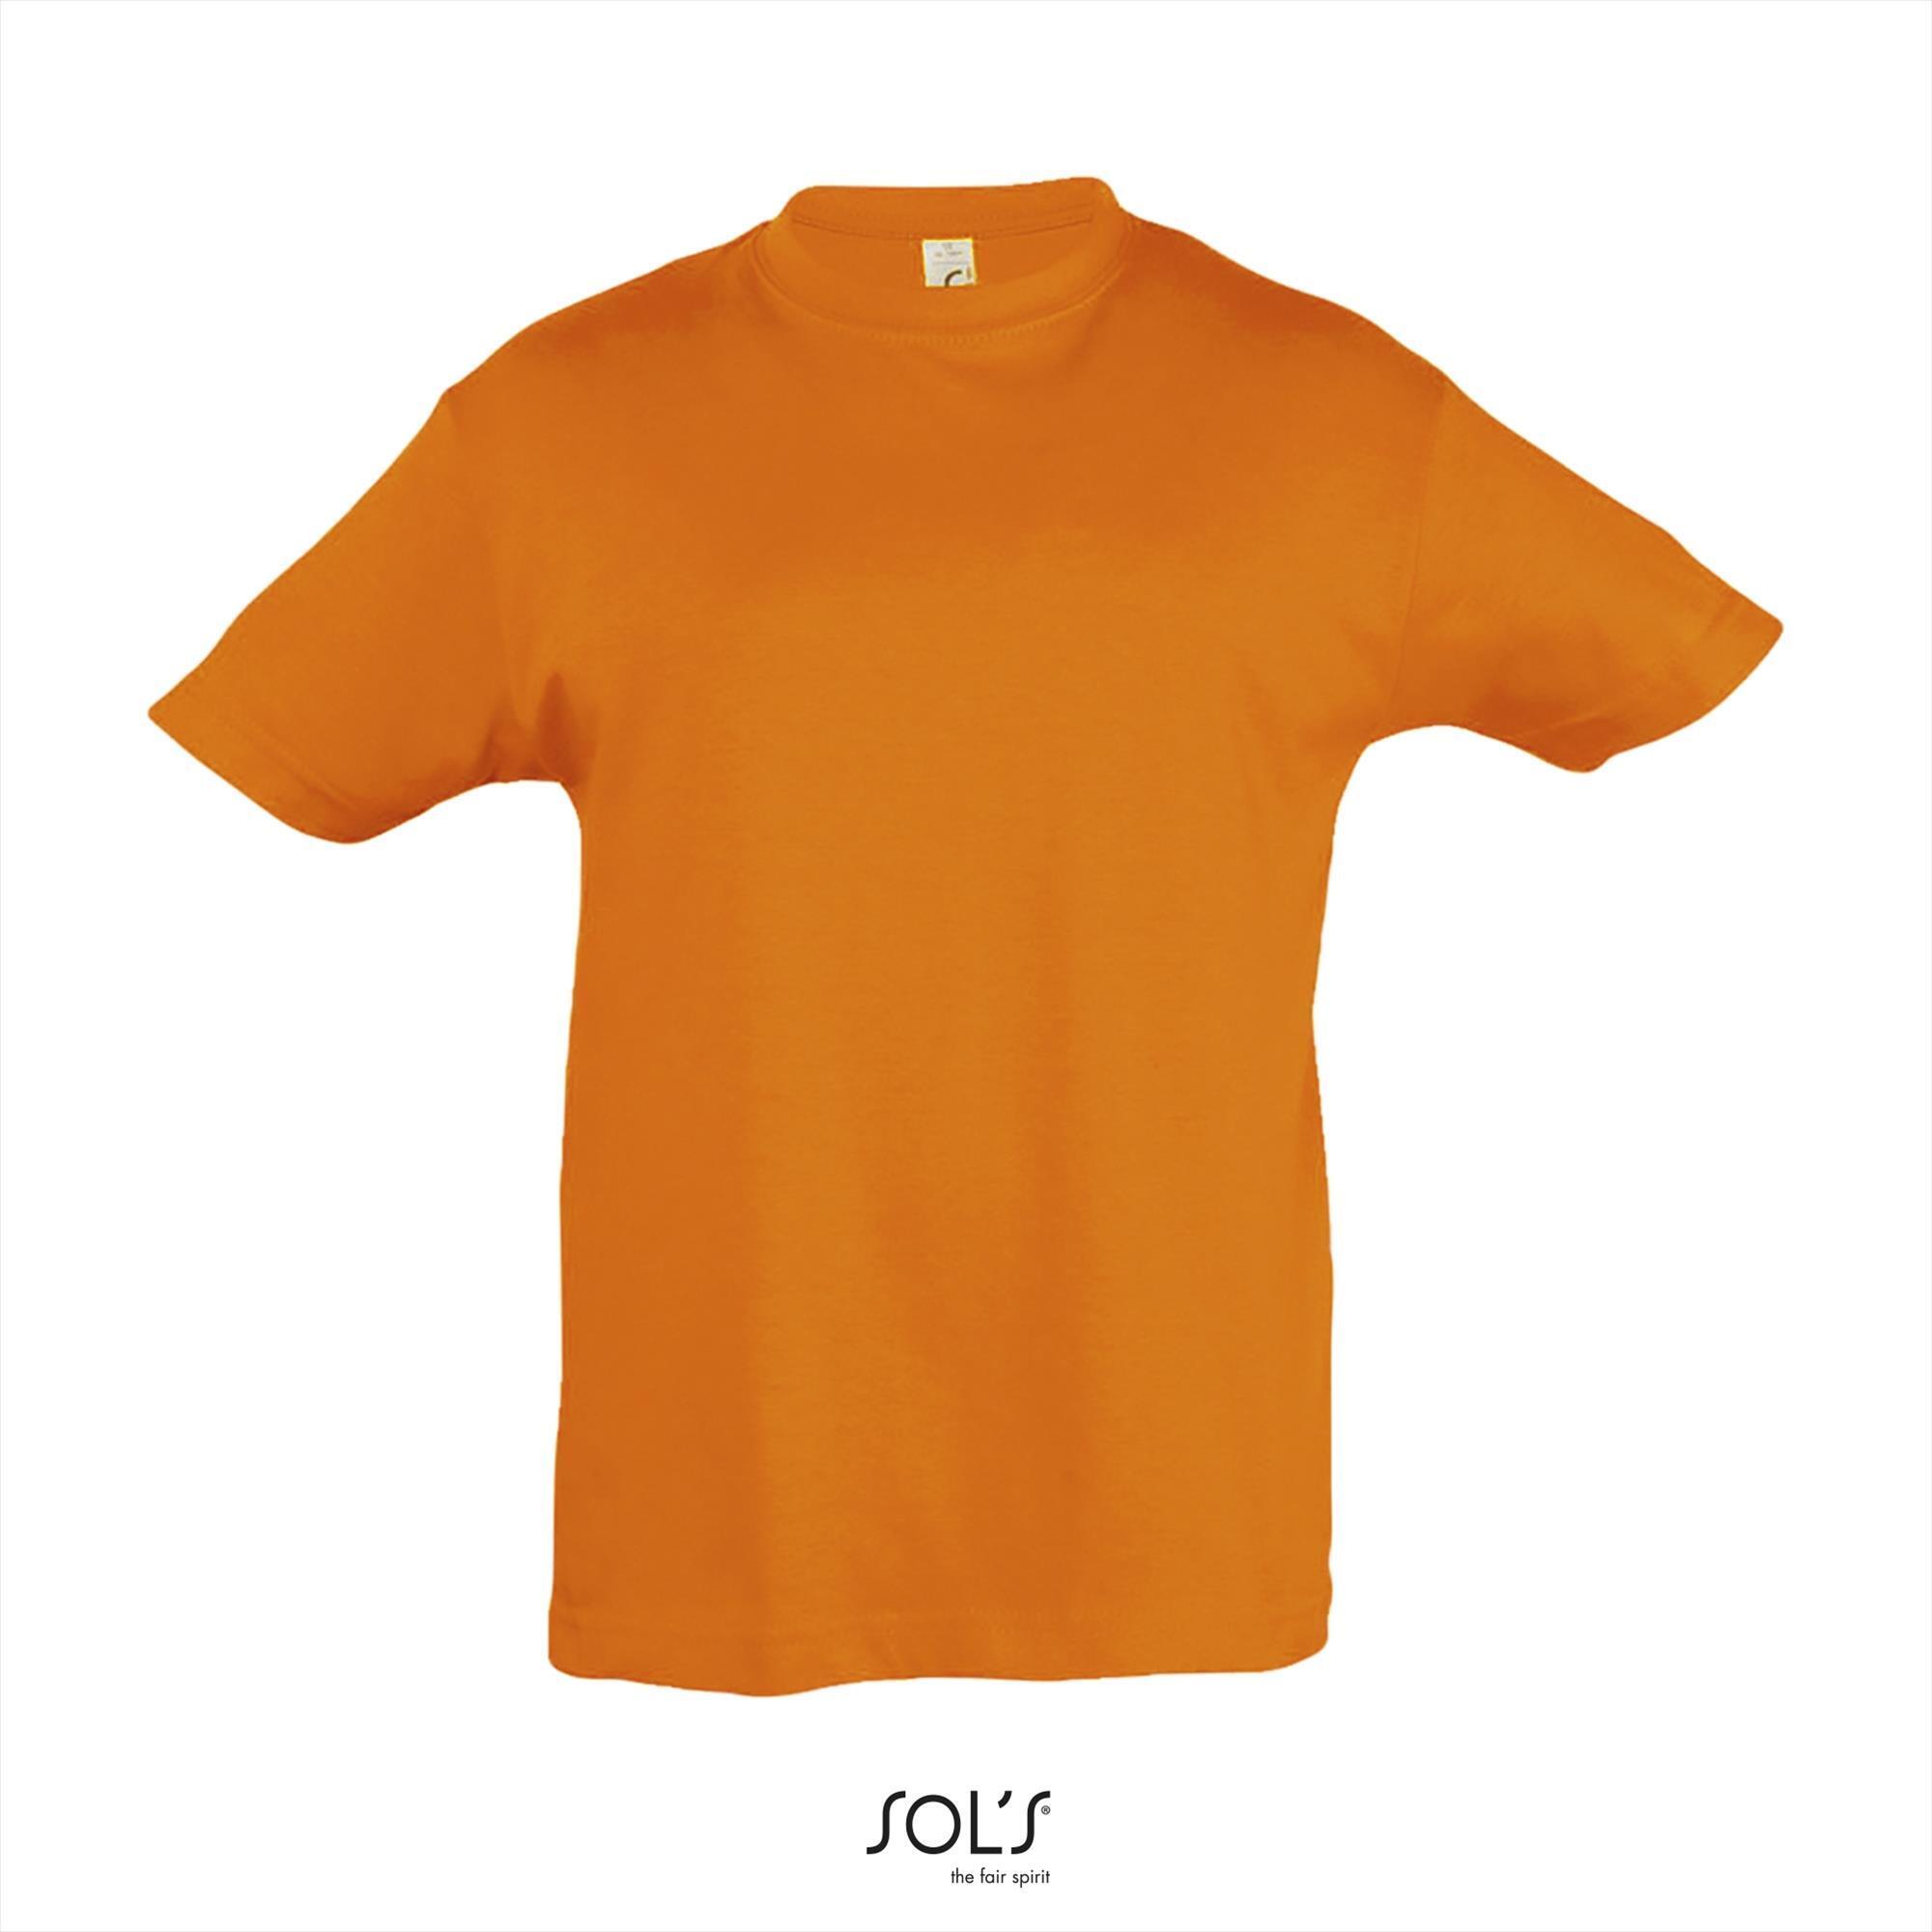 Klassiek kinder T-shirt oranje